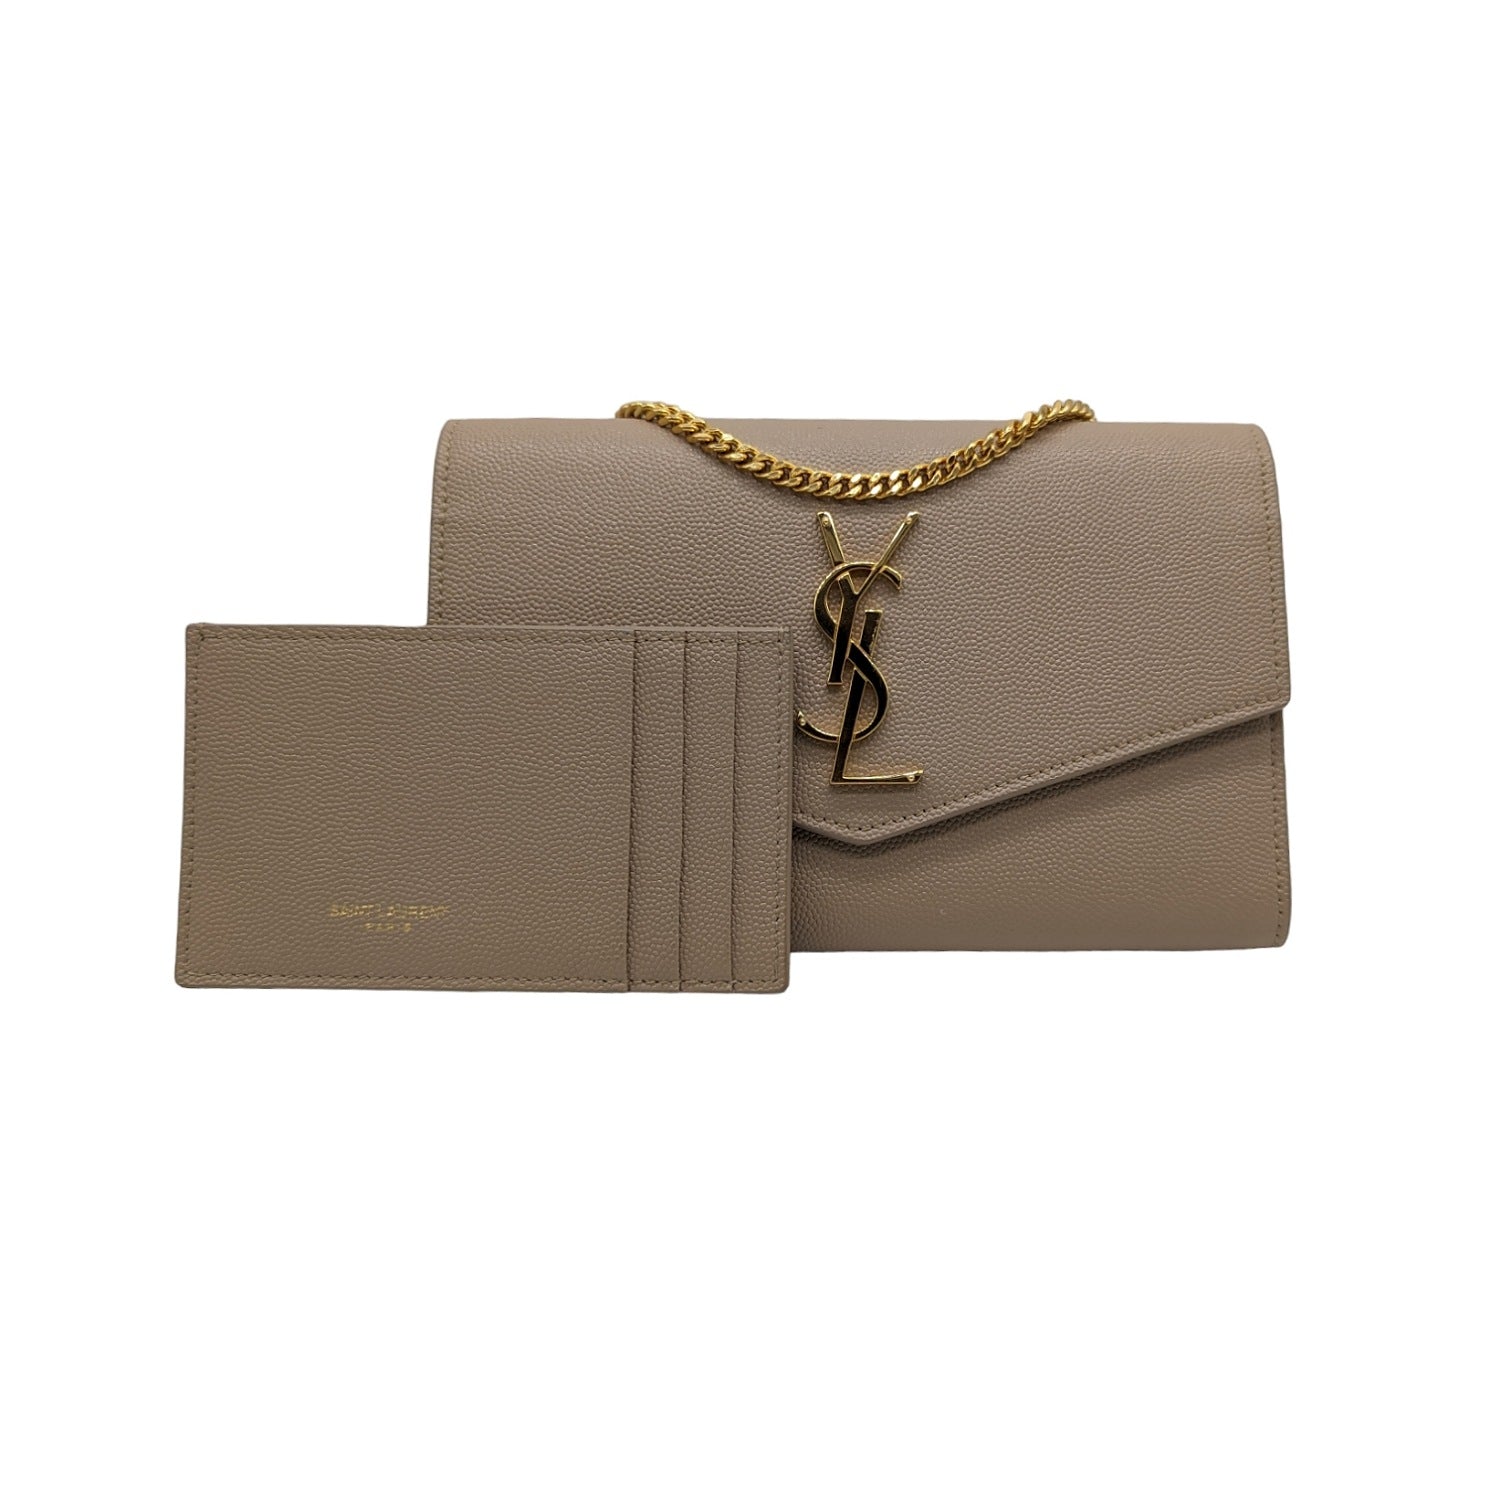 Saint Laurent bag uptown review Leather Satchel, Small, Medium